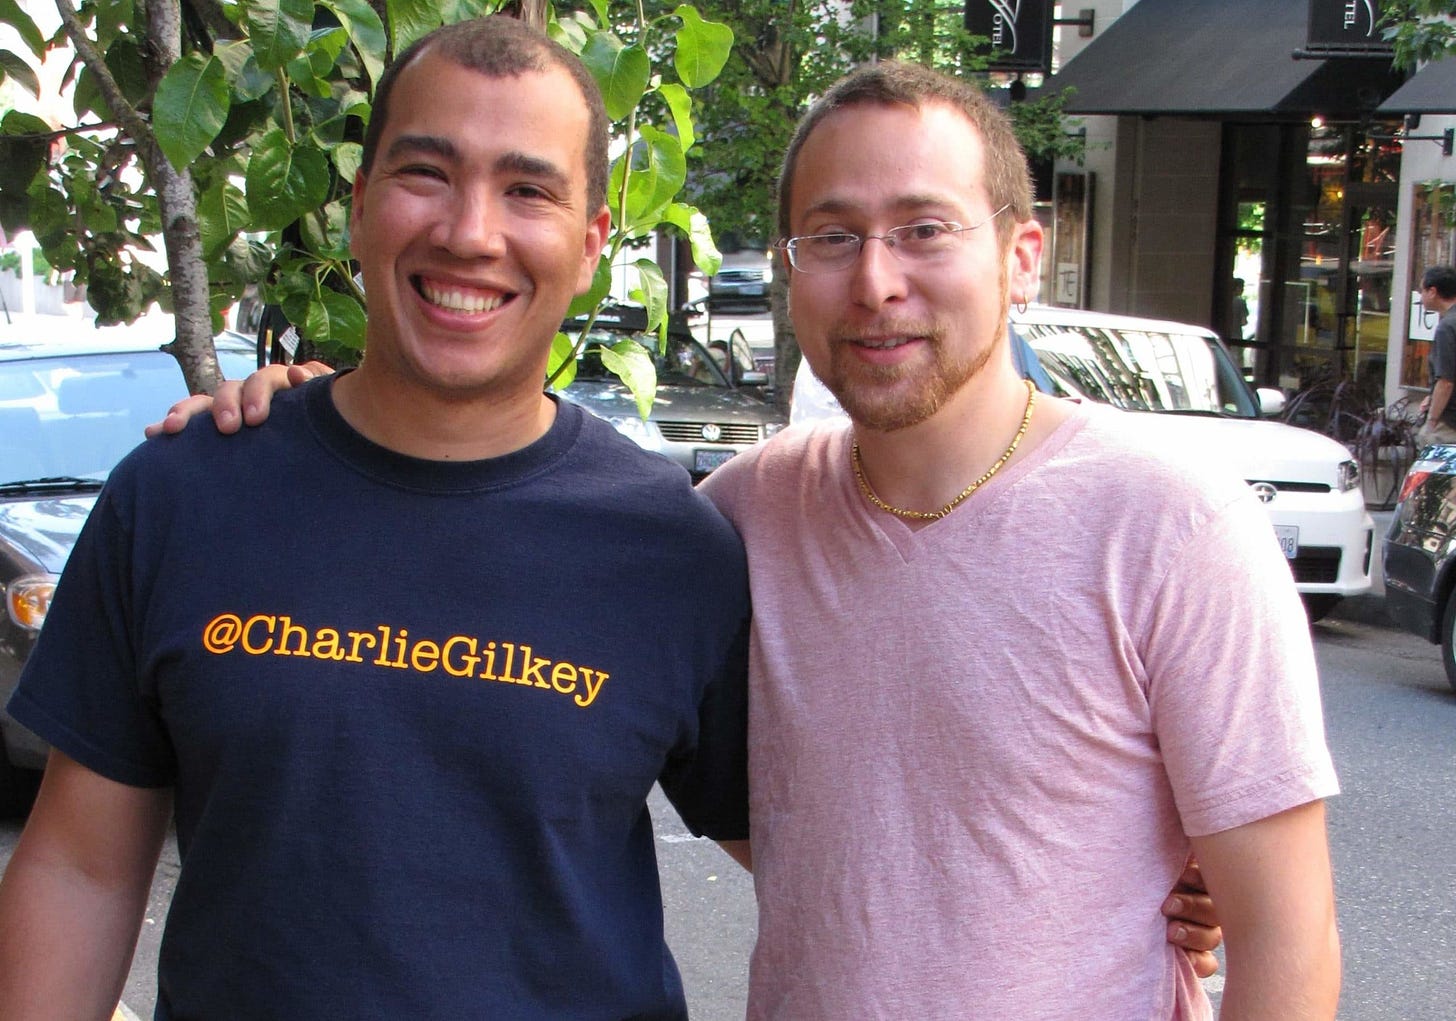 Joshua Waldman and Charlie Gilkey